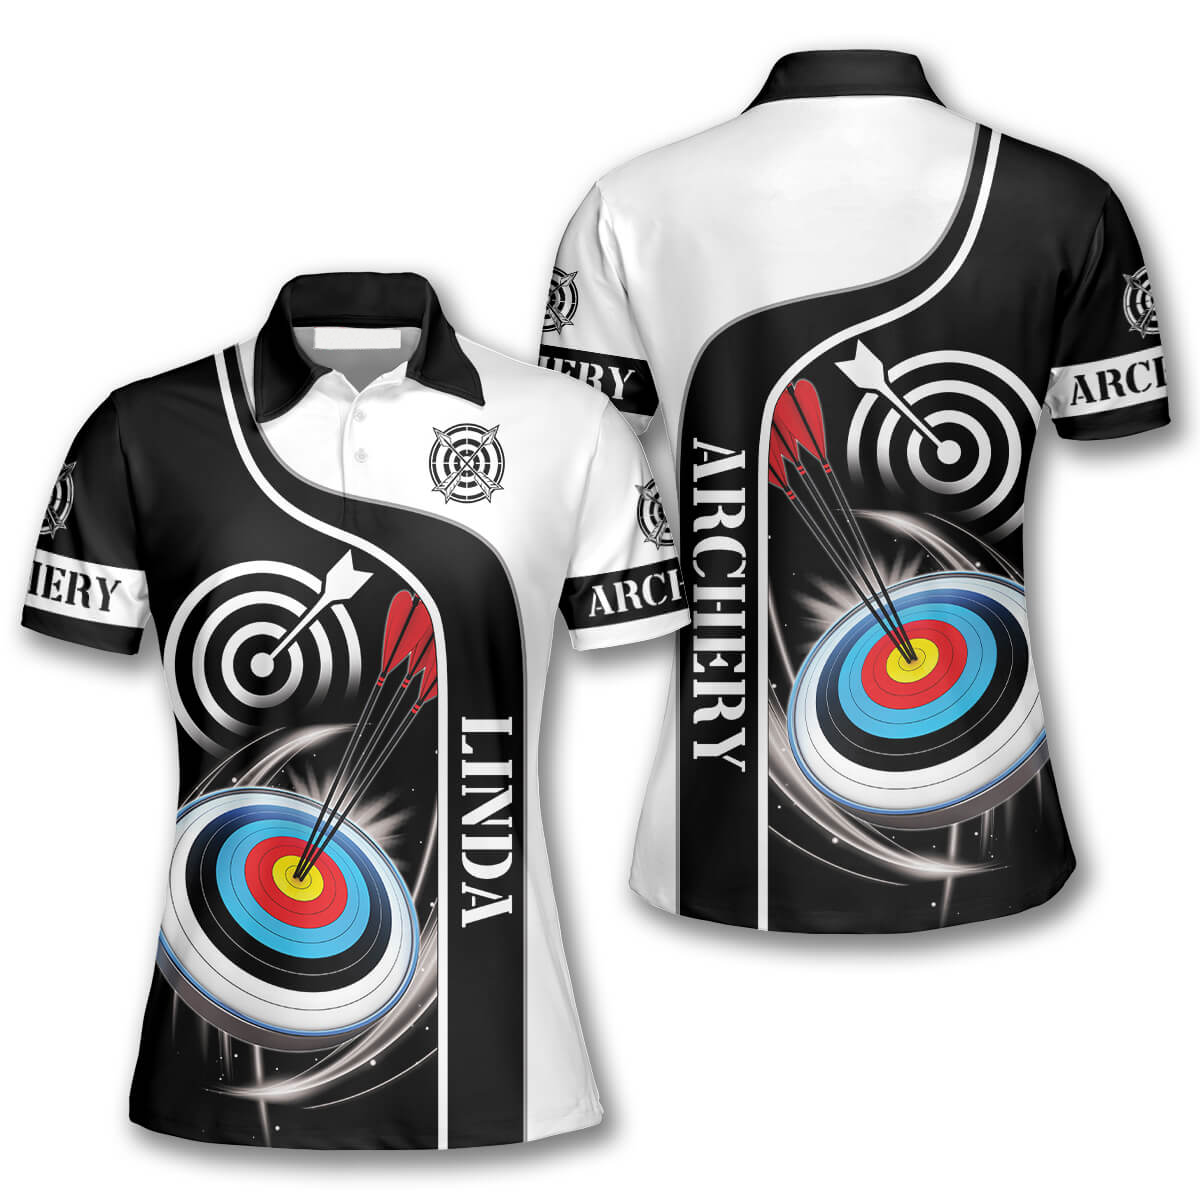 Archery Targets Black White Custom Archery Shirts for Women/ Gift for Her/ Archery Shirt